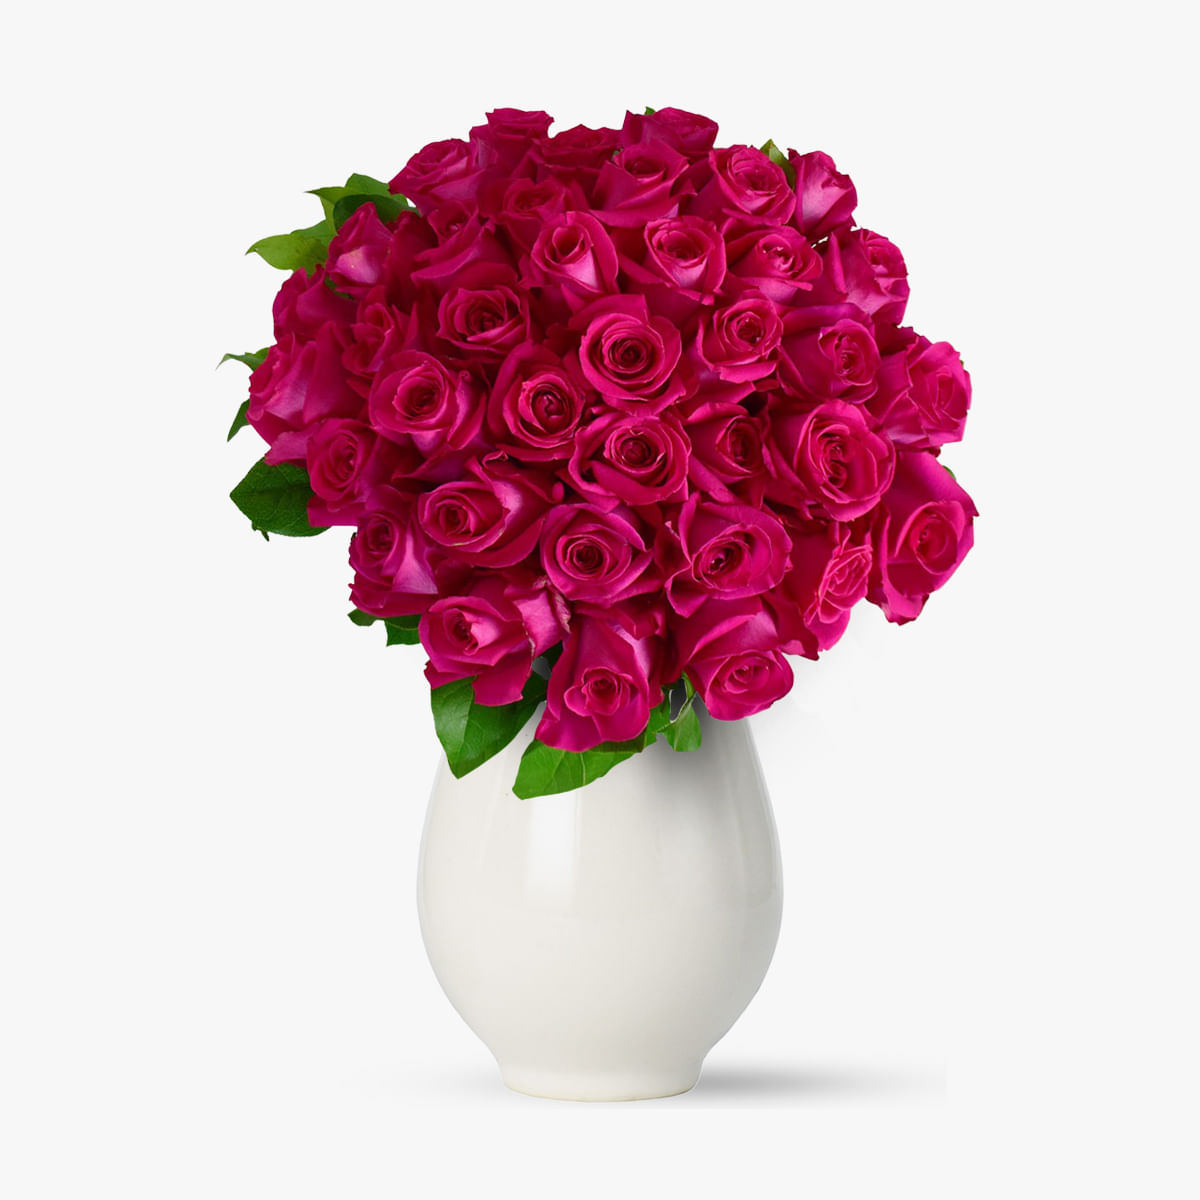 Buchet de 51 trandafiri roz – Standard Buchet imagine 2022